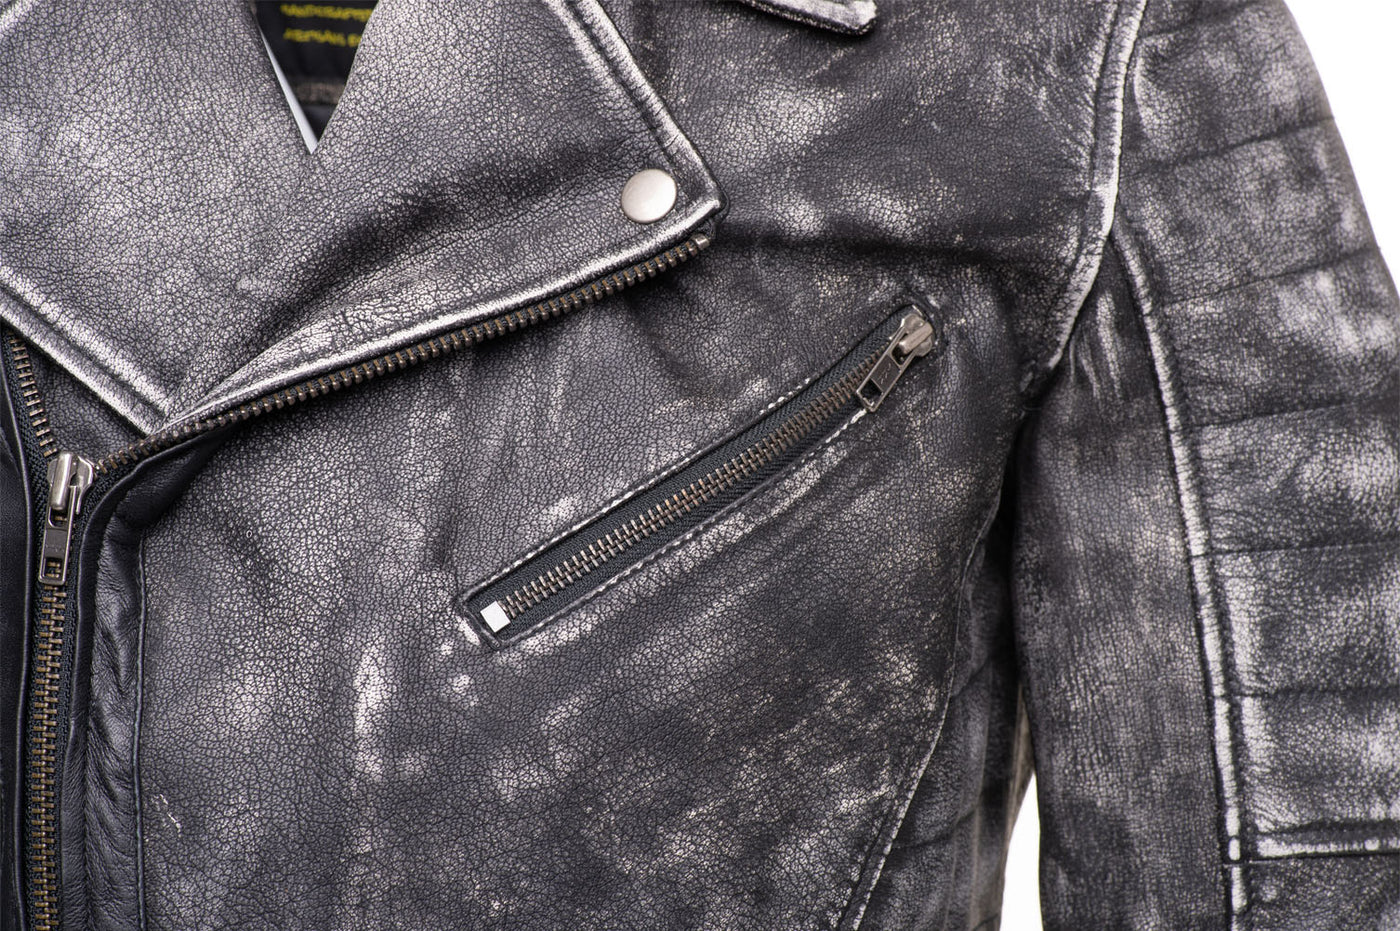 Miles stone wash biker leather jacket